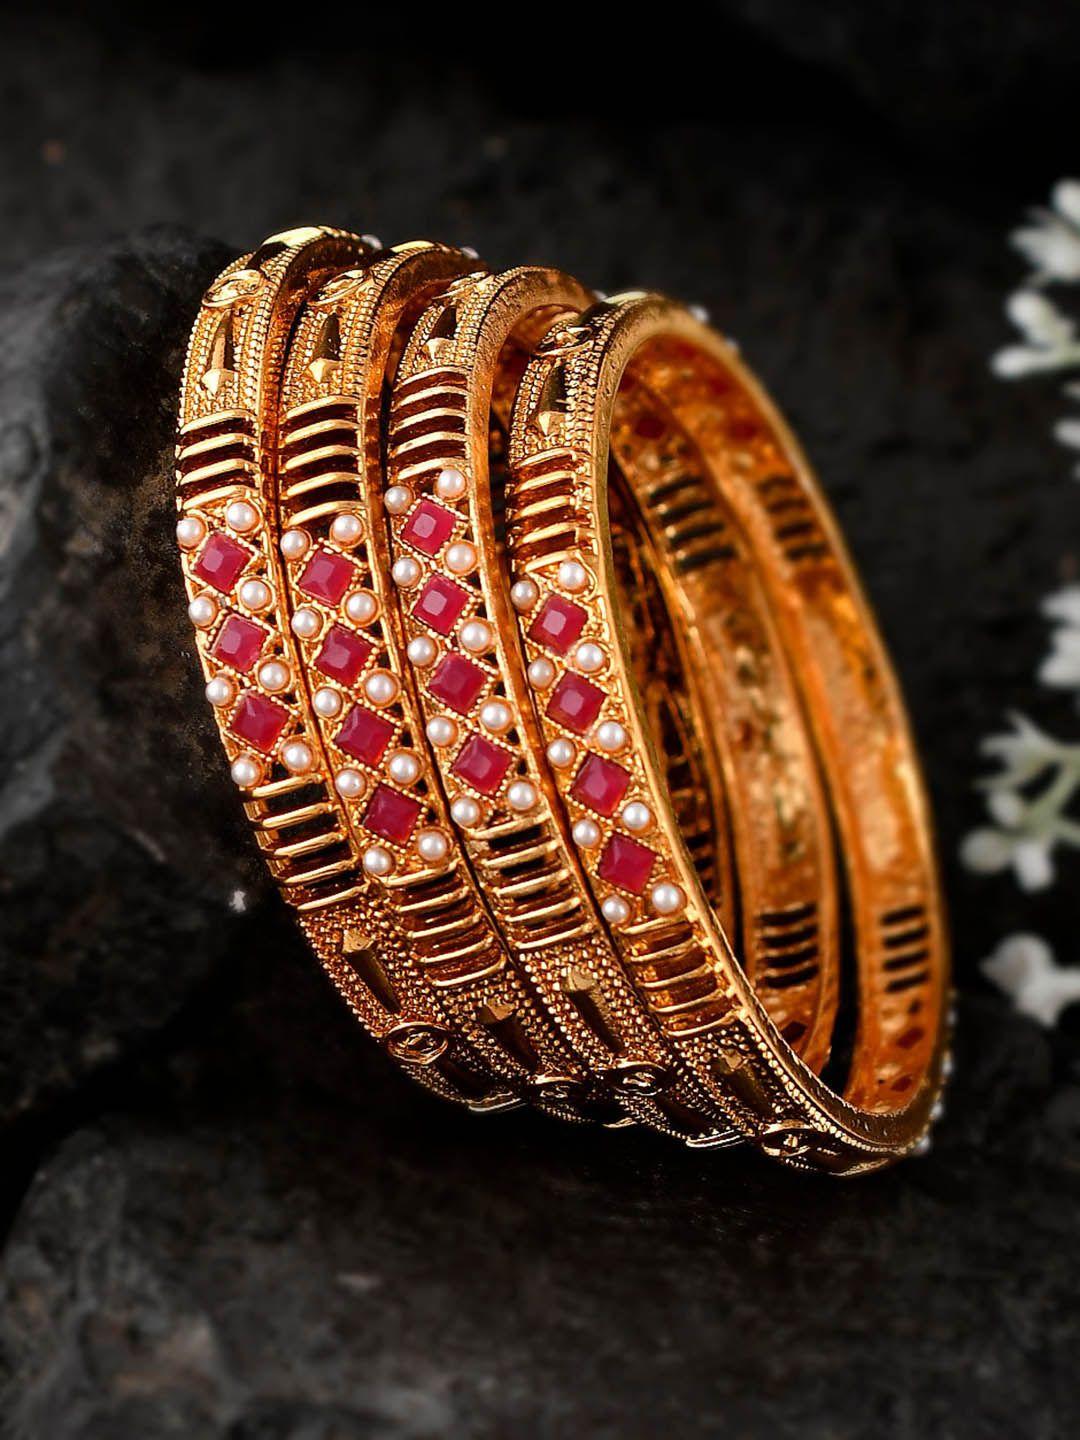 shoshaa set of 4 gold-plated stone-studded bangles